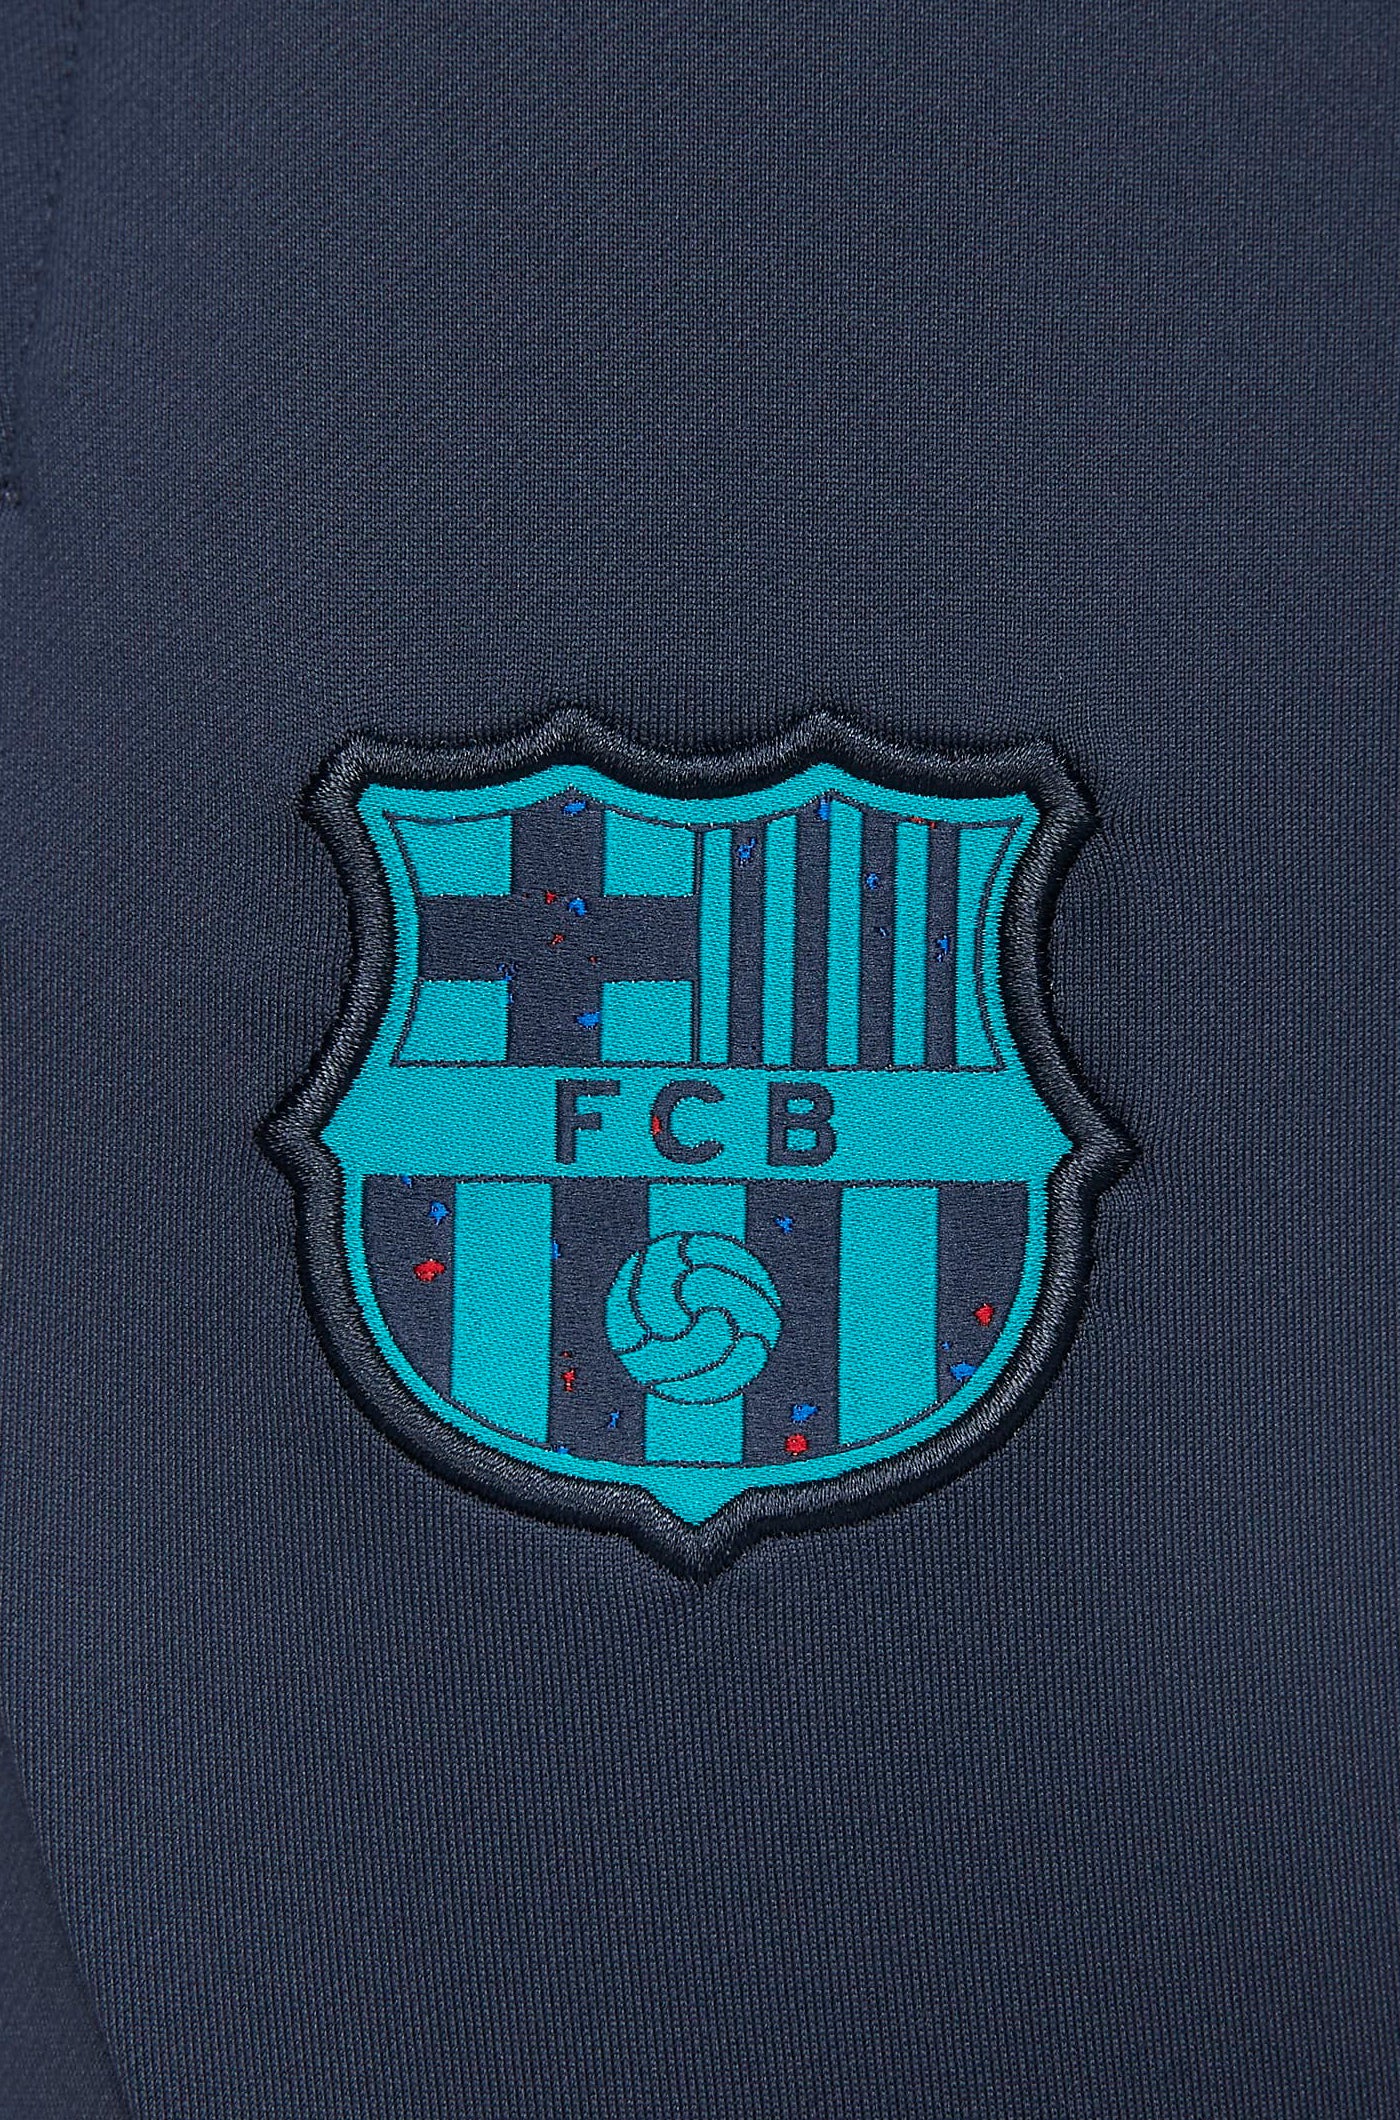 Pantalons entrenament FC Barcelona 23/24